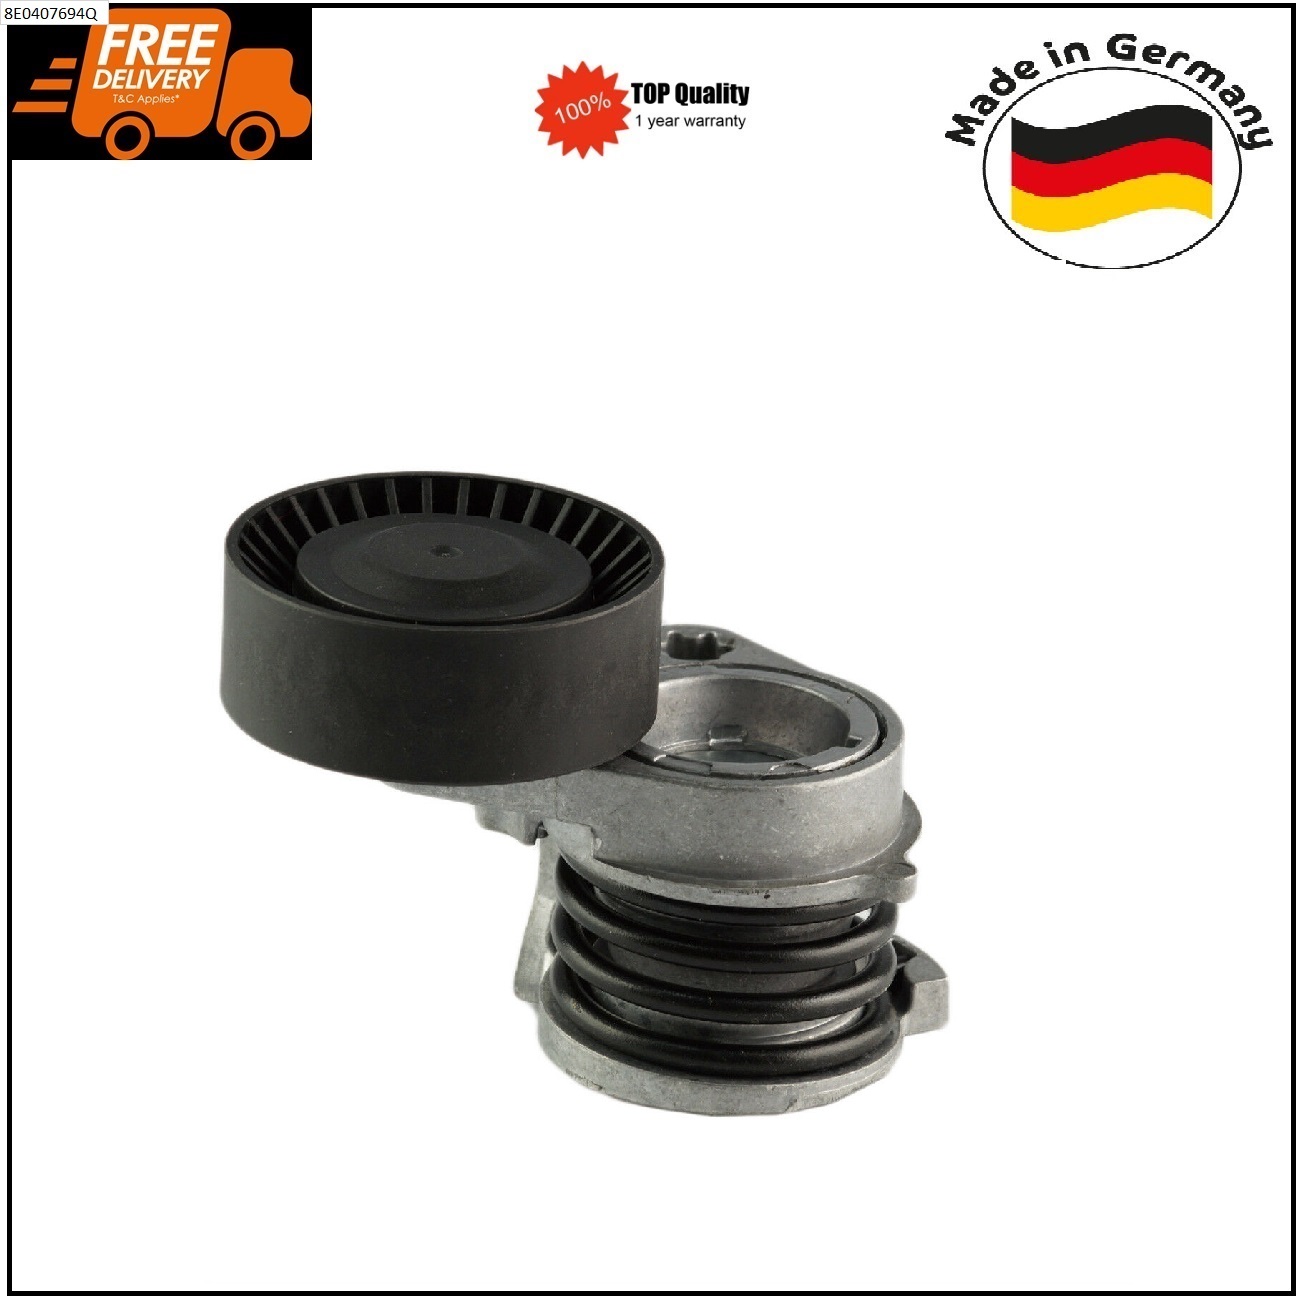 Drive Belt Tensioner for BMW E46 E39 E60 E83 E53 E85 11287512758 German Made